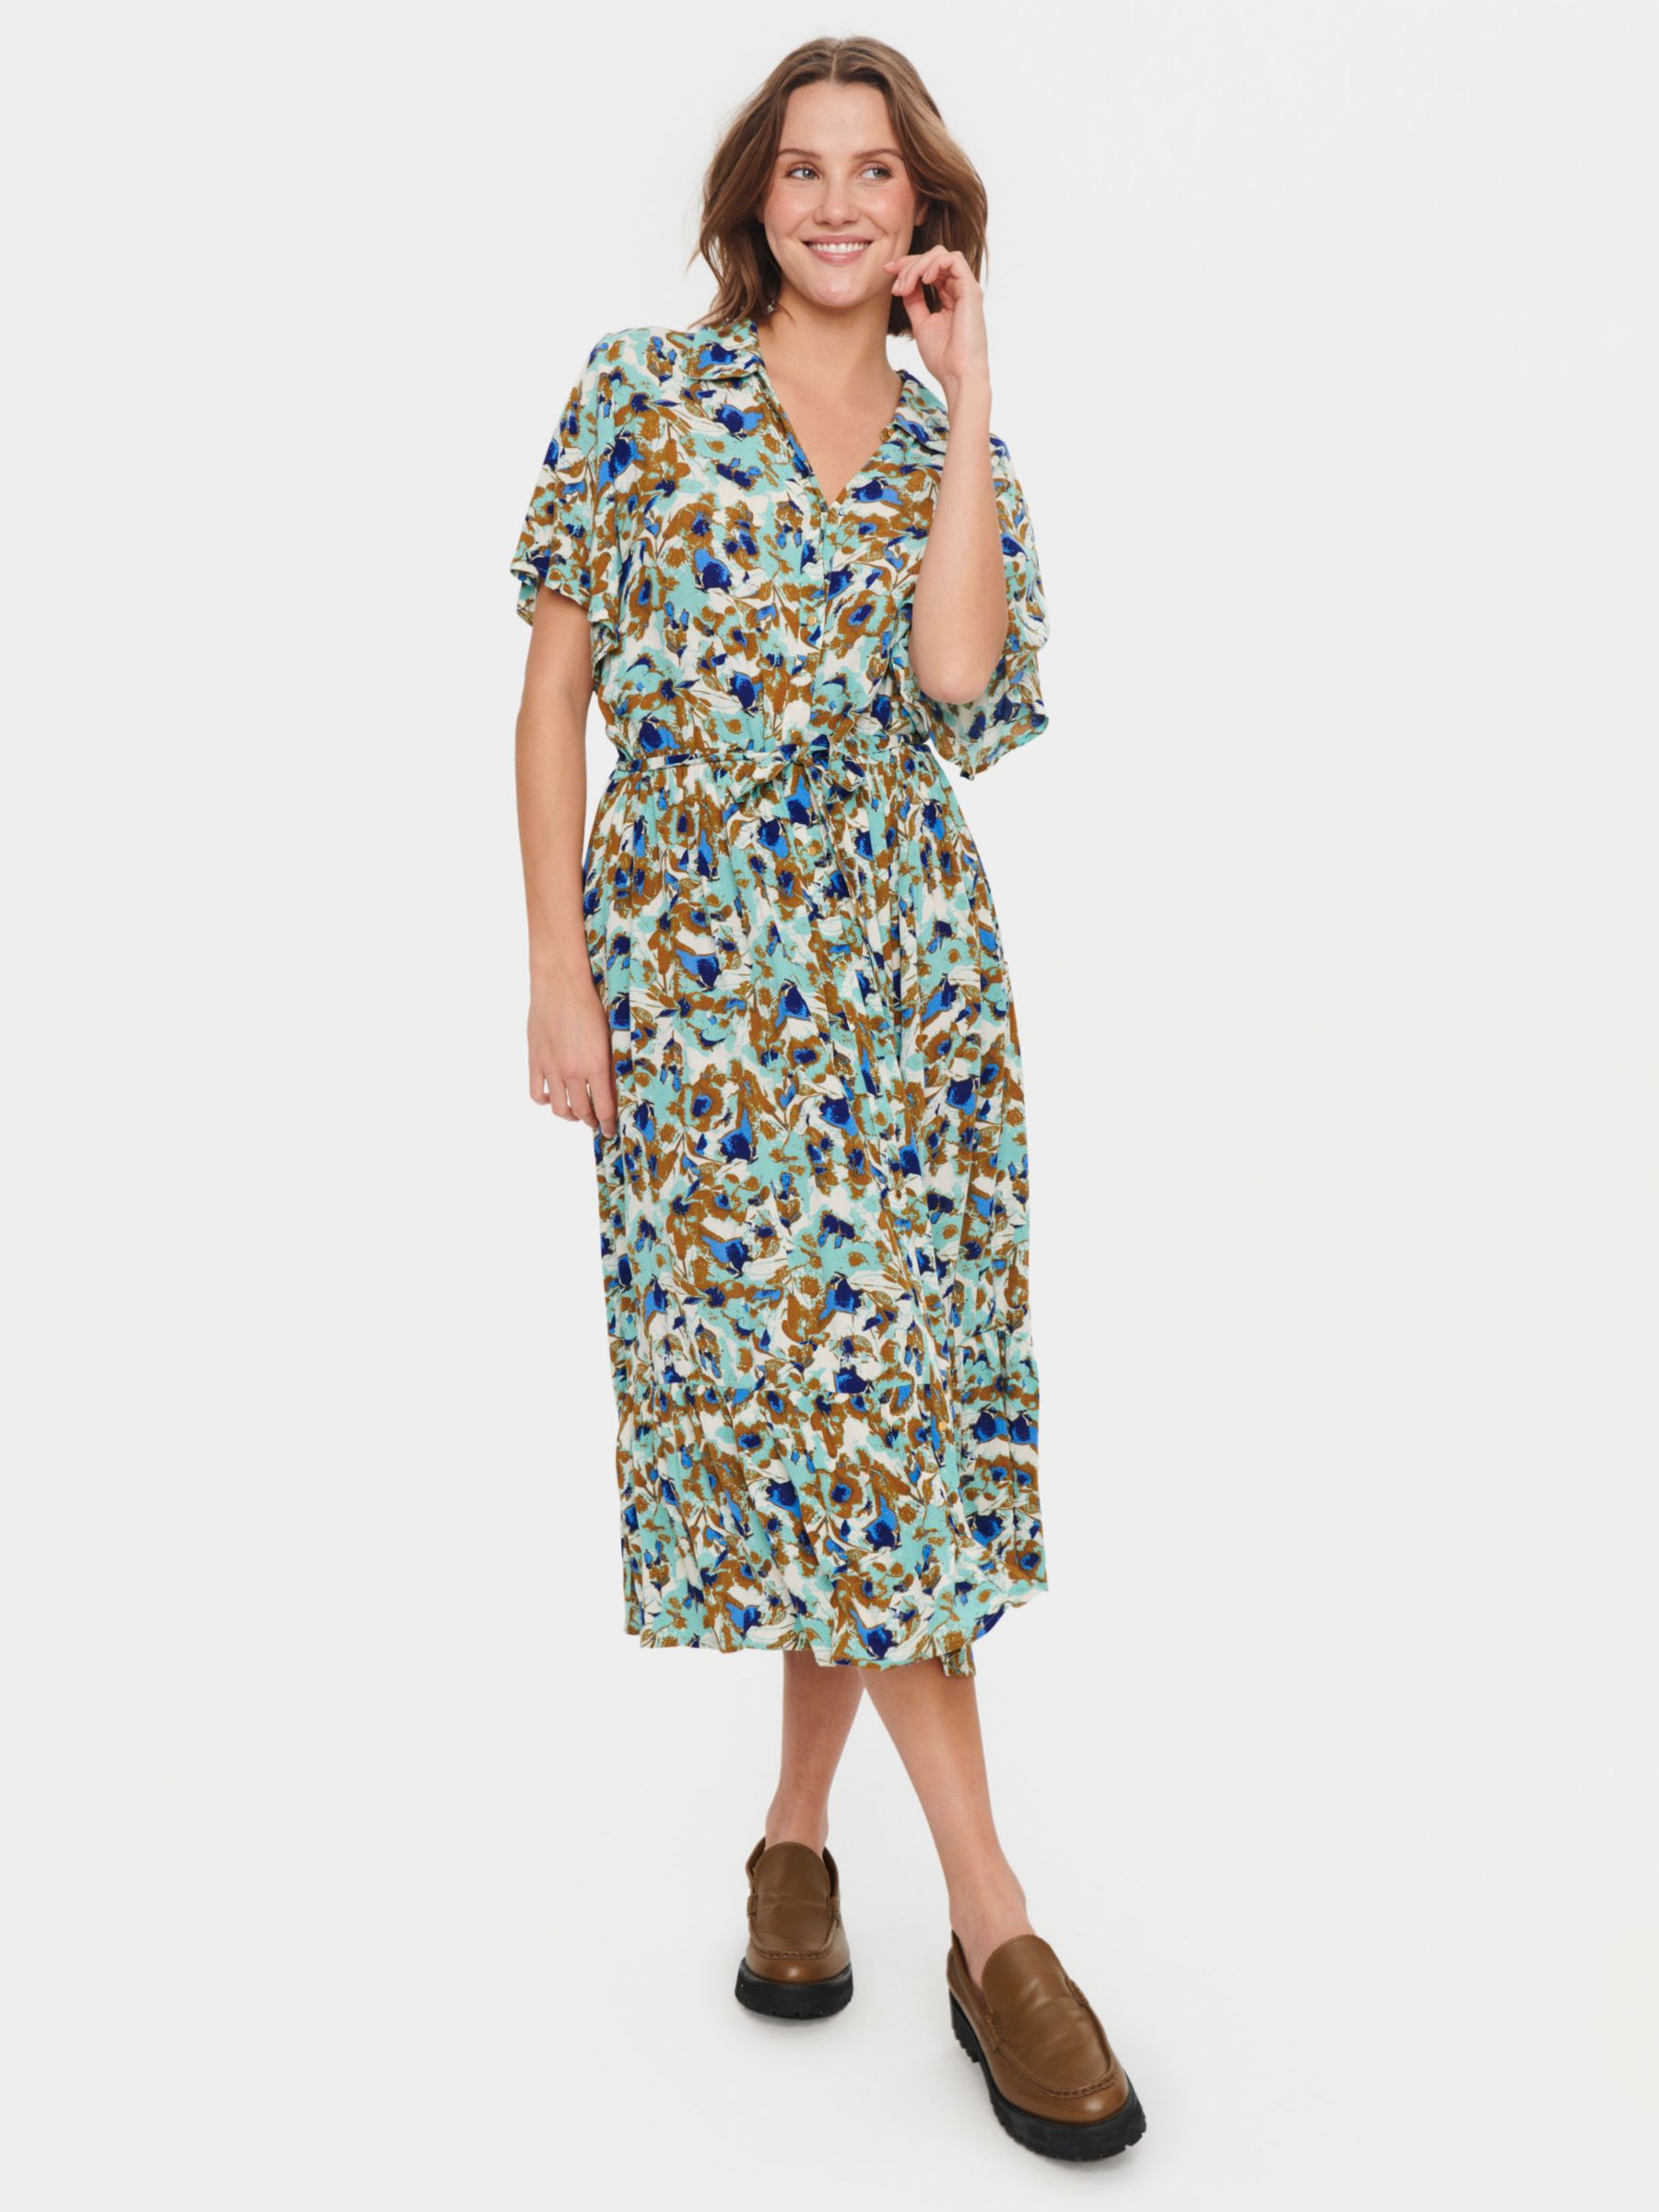 Saint Tropez Didi Abstract Print Midi Shirt Dress, Pastel Turquoise/Multi, XS